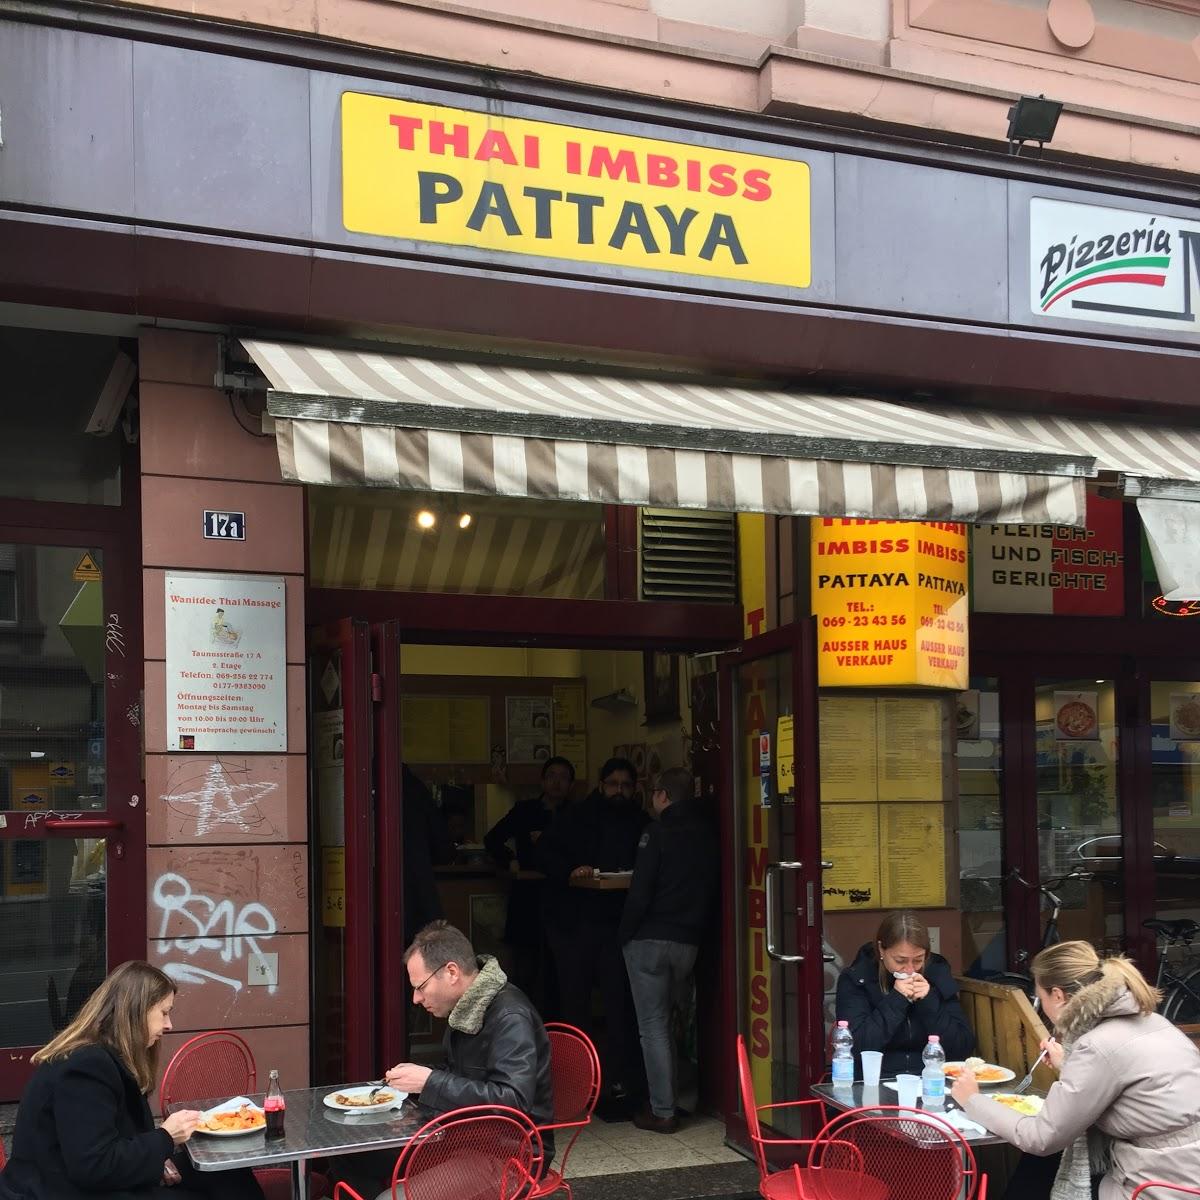 Restaurant "Thai Imbiss Pattaya" in Frankfurt am Main